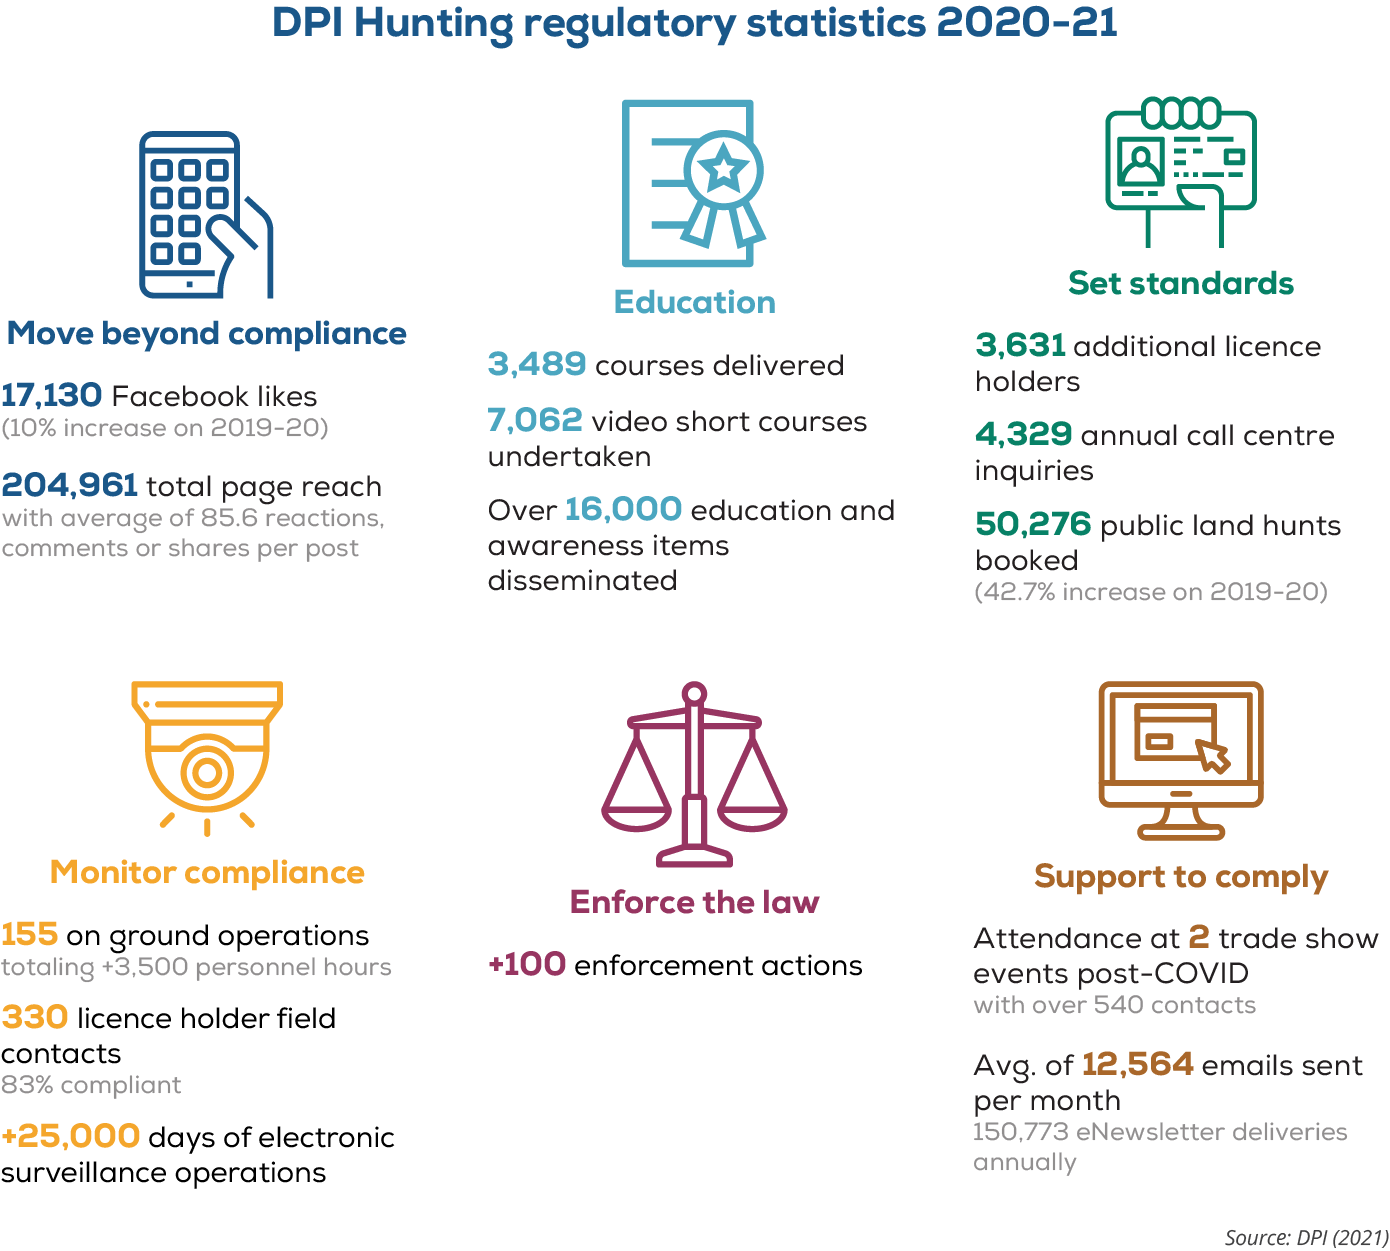 DPI Hunting regulatory statistics 2020-21